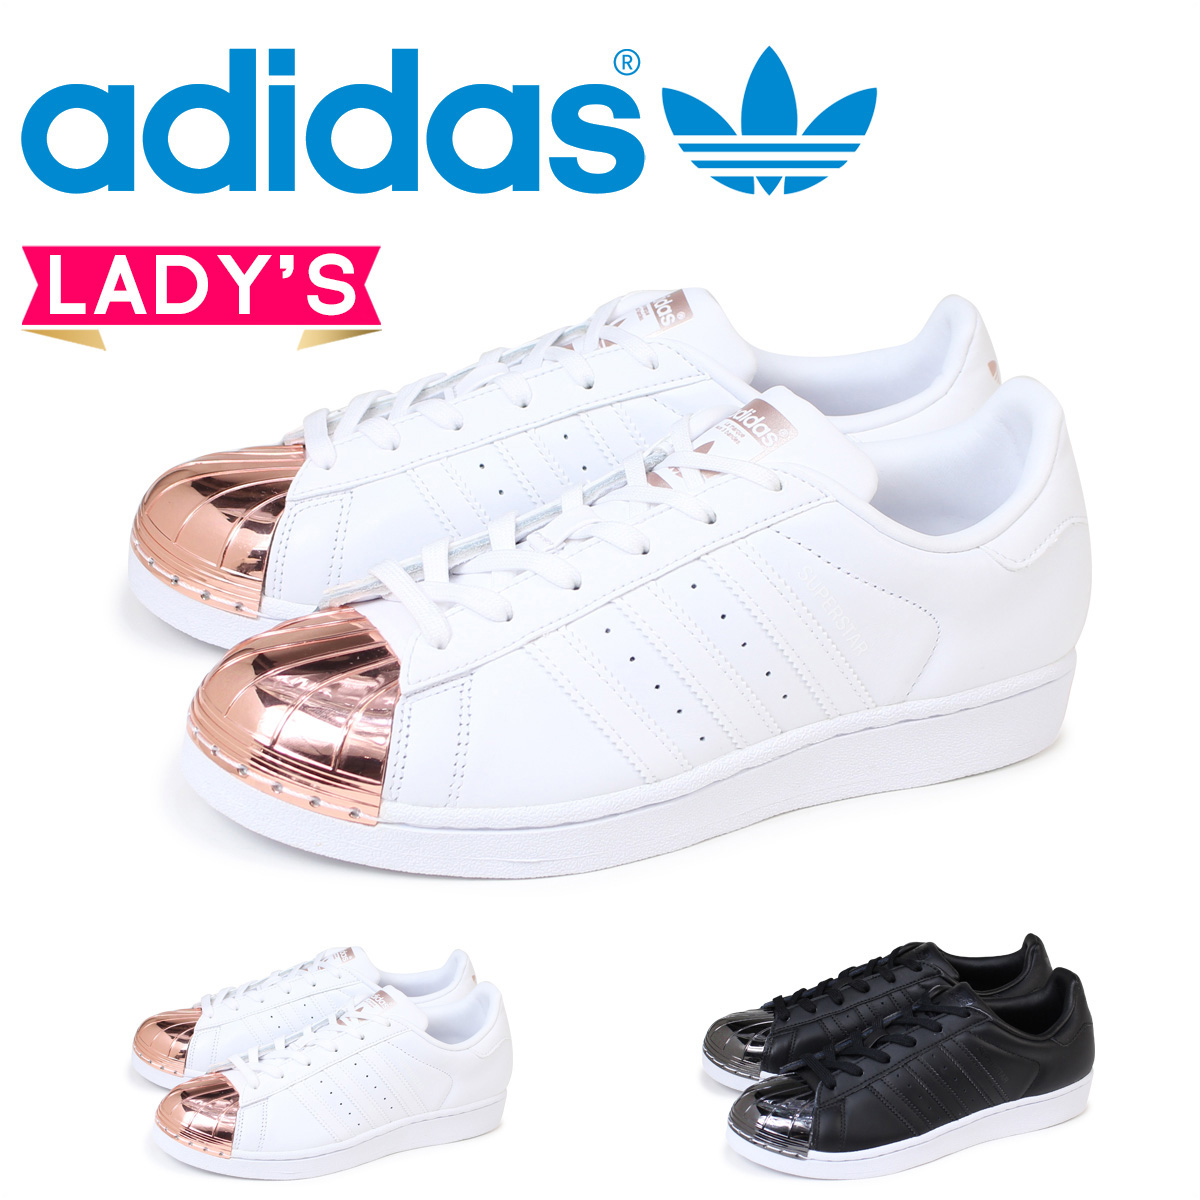 Sugar Online Shop: adidas superstar Lady's sneakers Adidas 